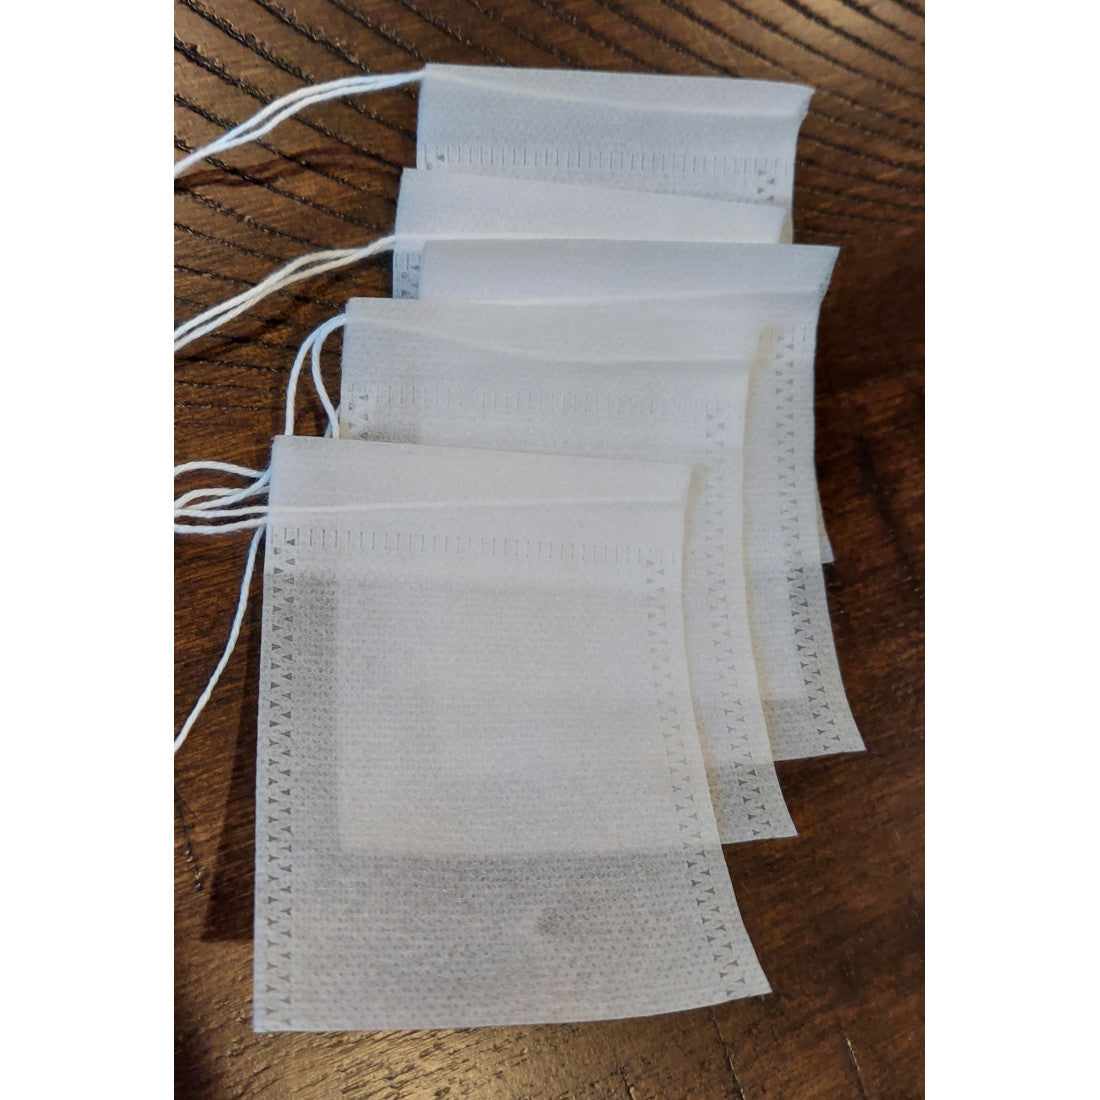 5 reusable drawstring tea bags